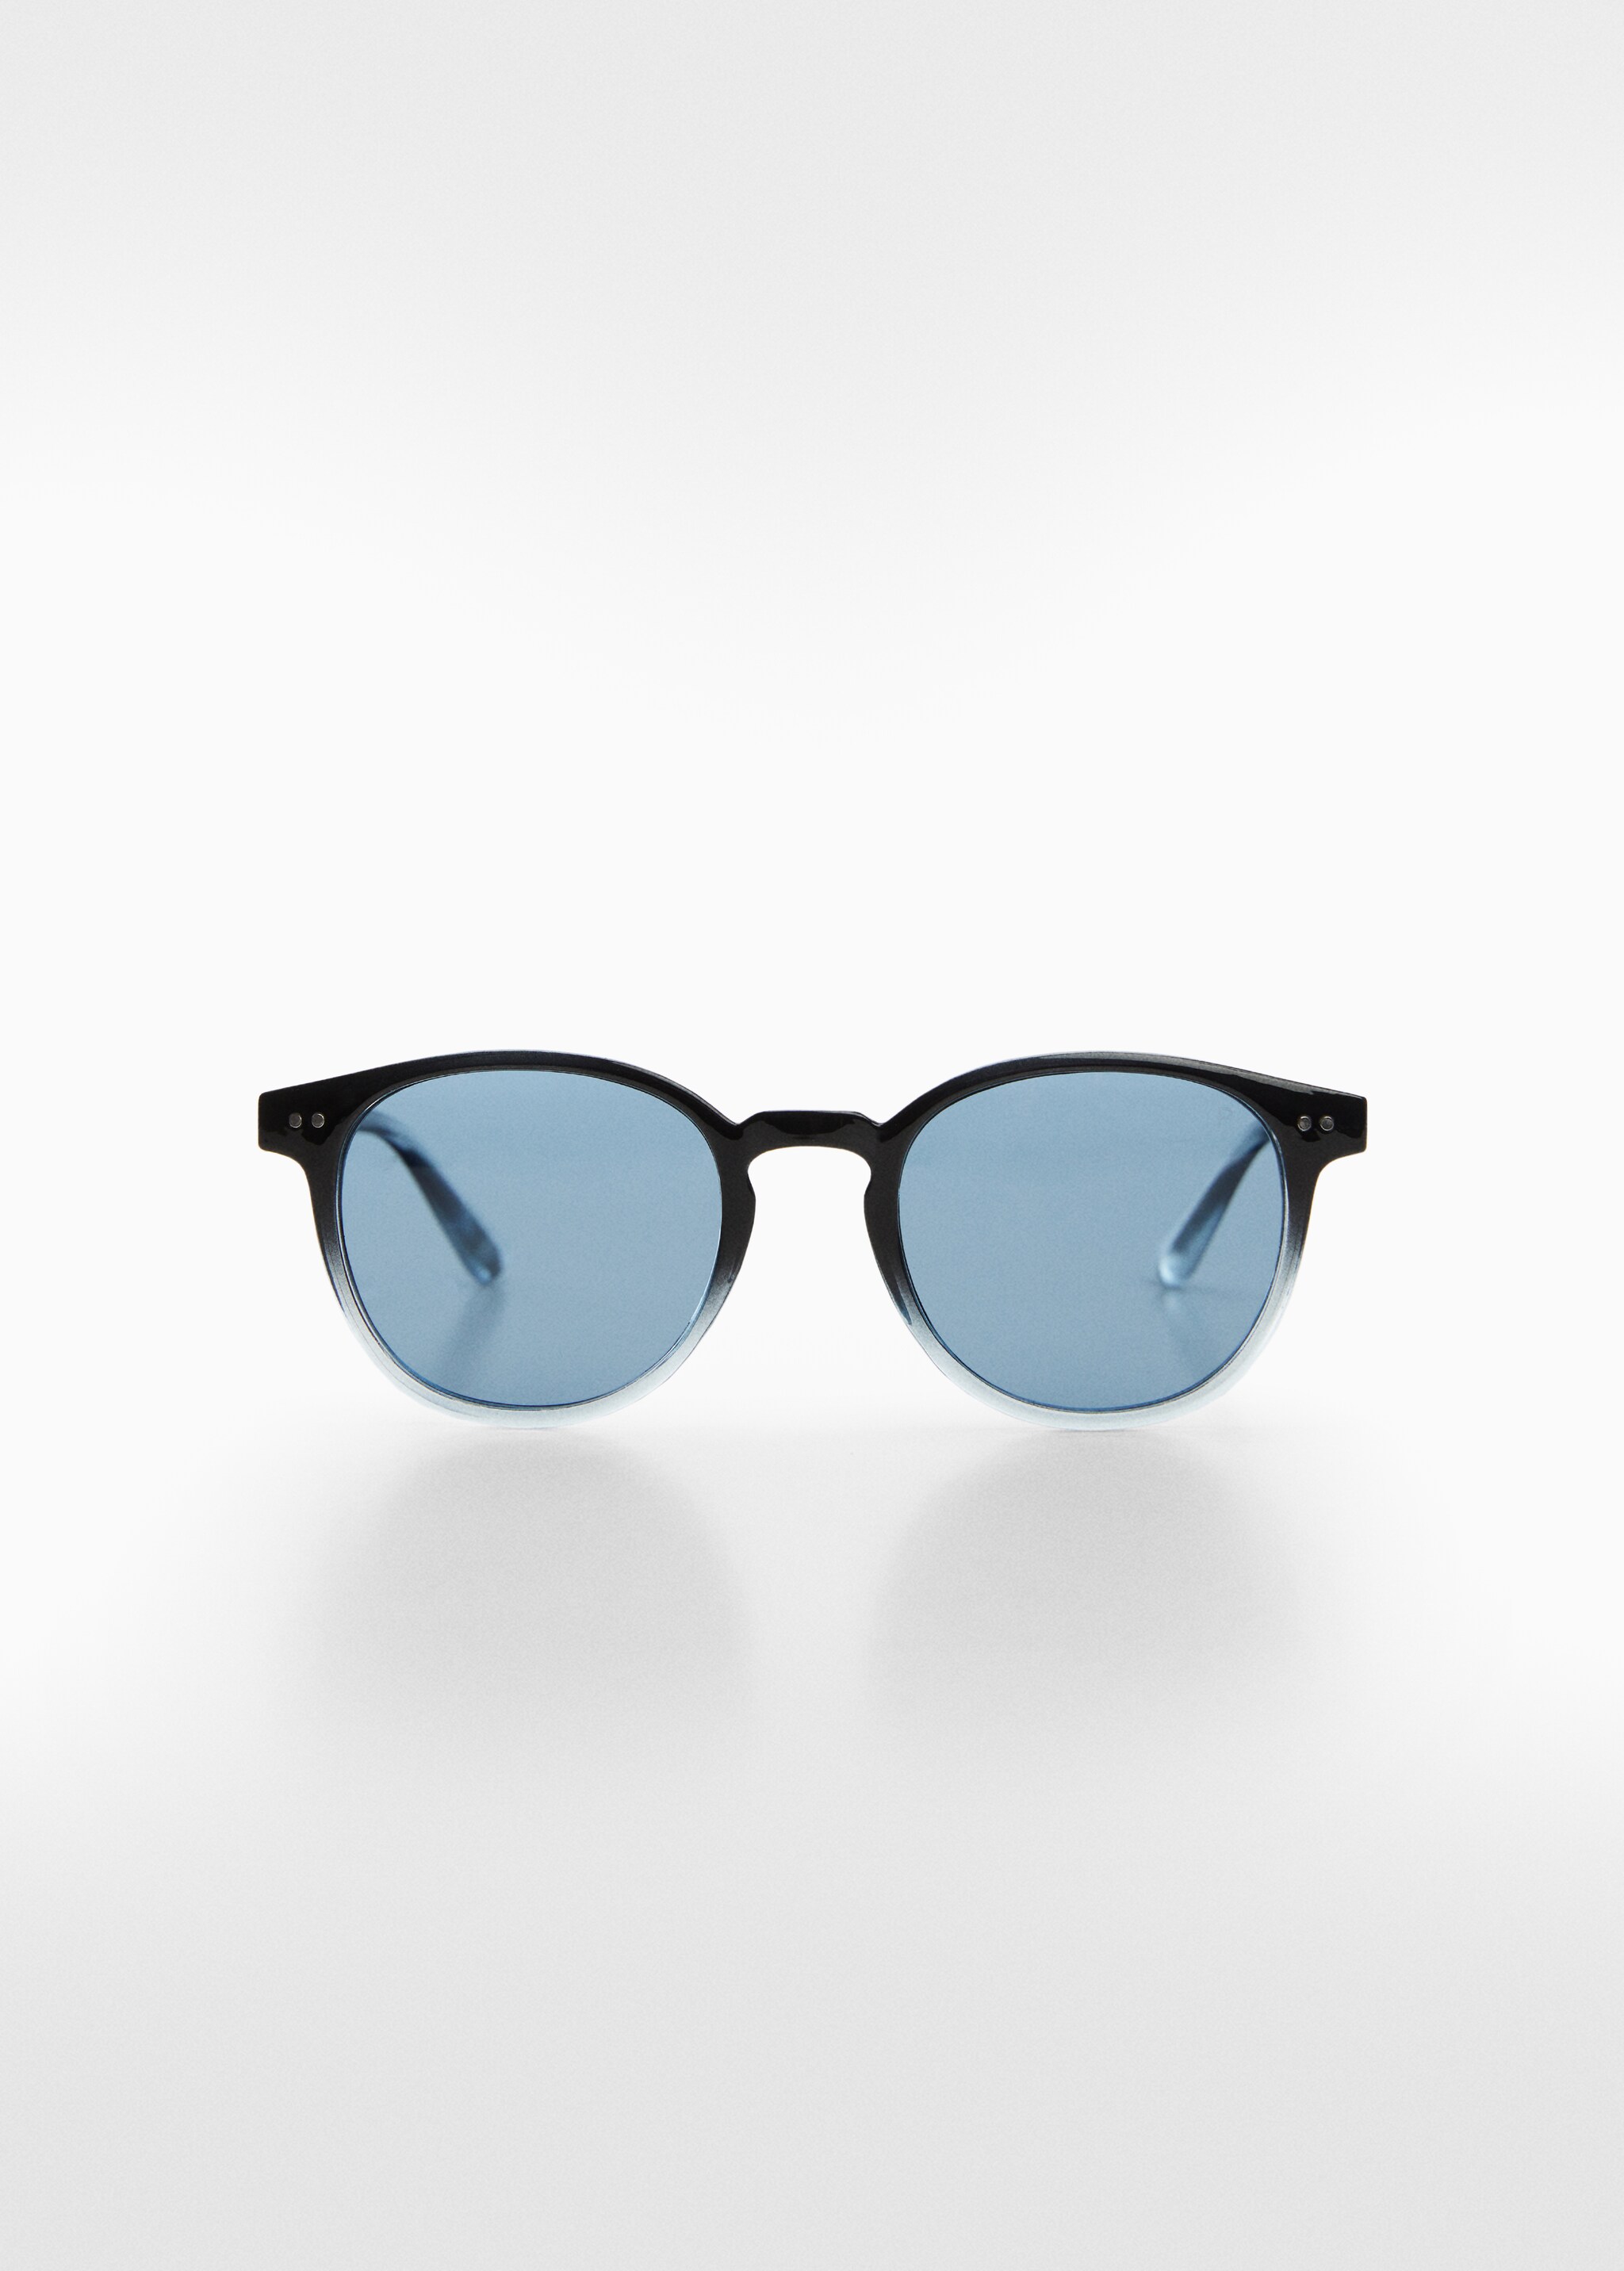 Polarized sunglasses - Article without model